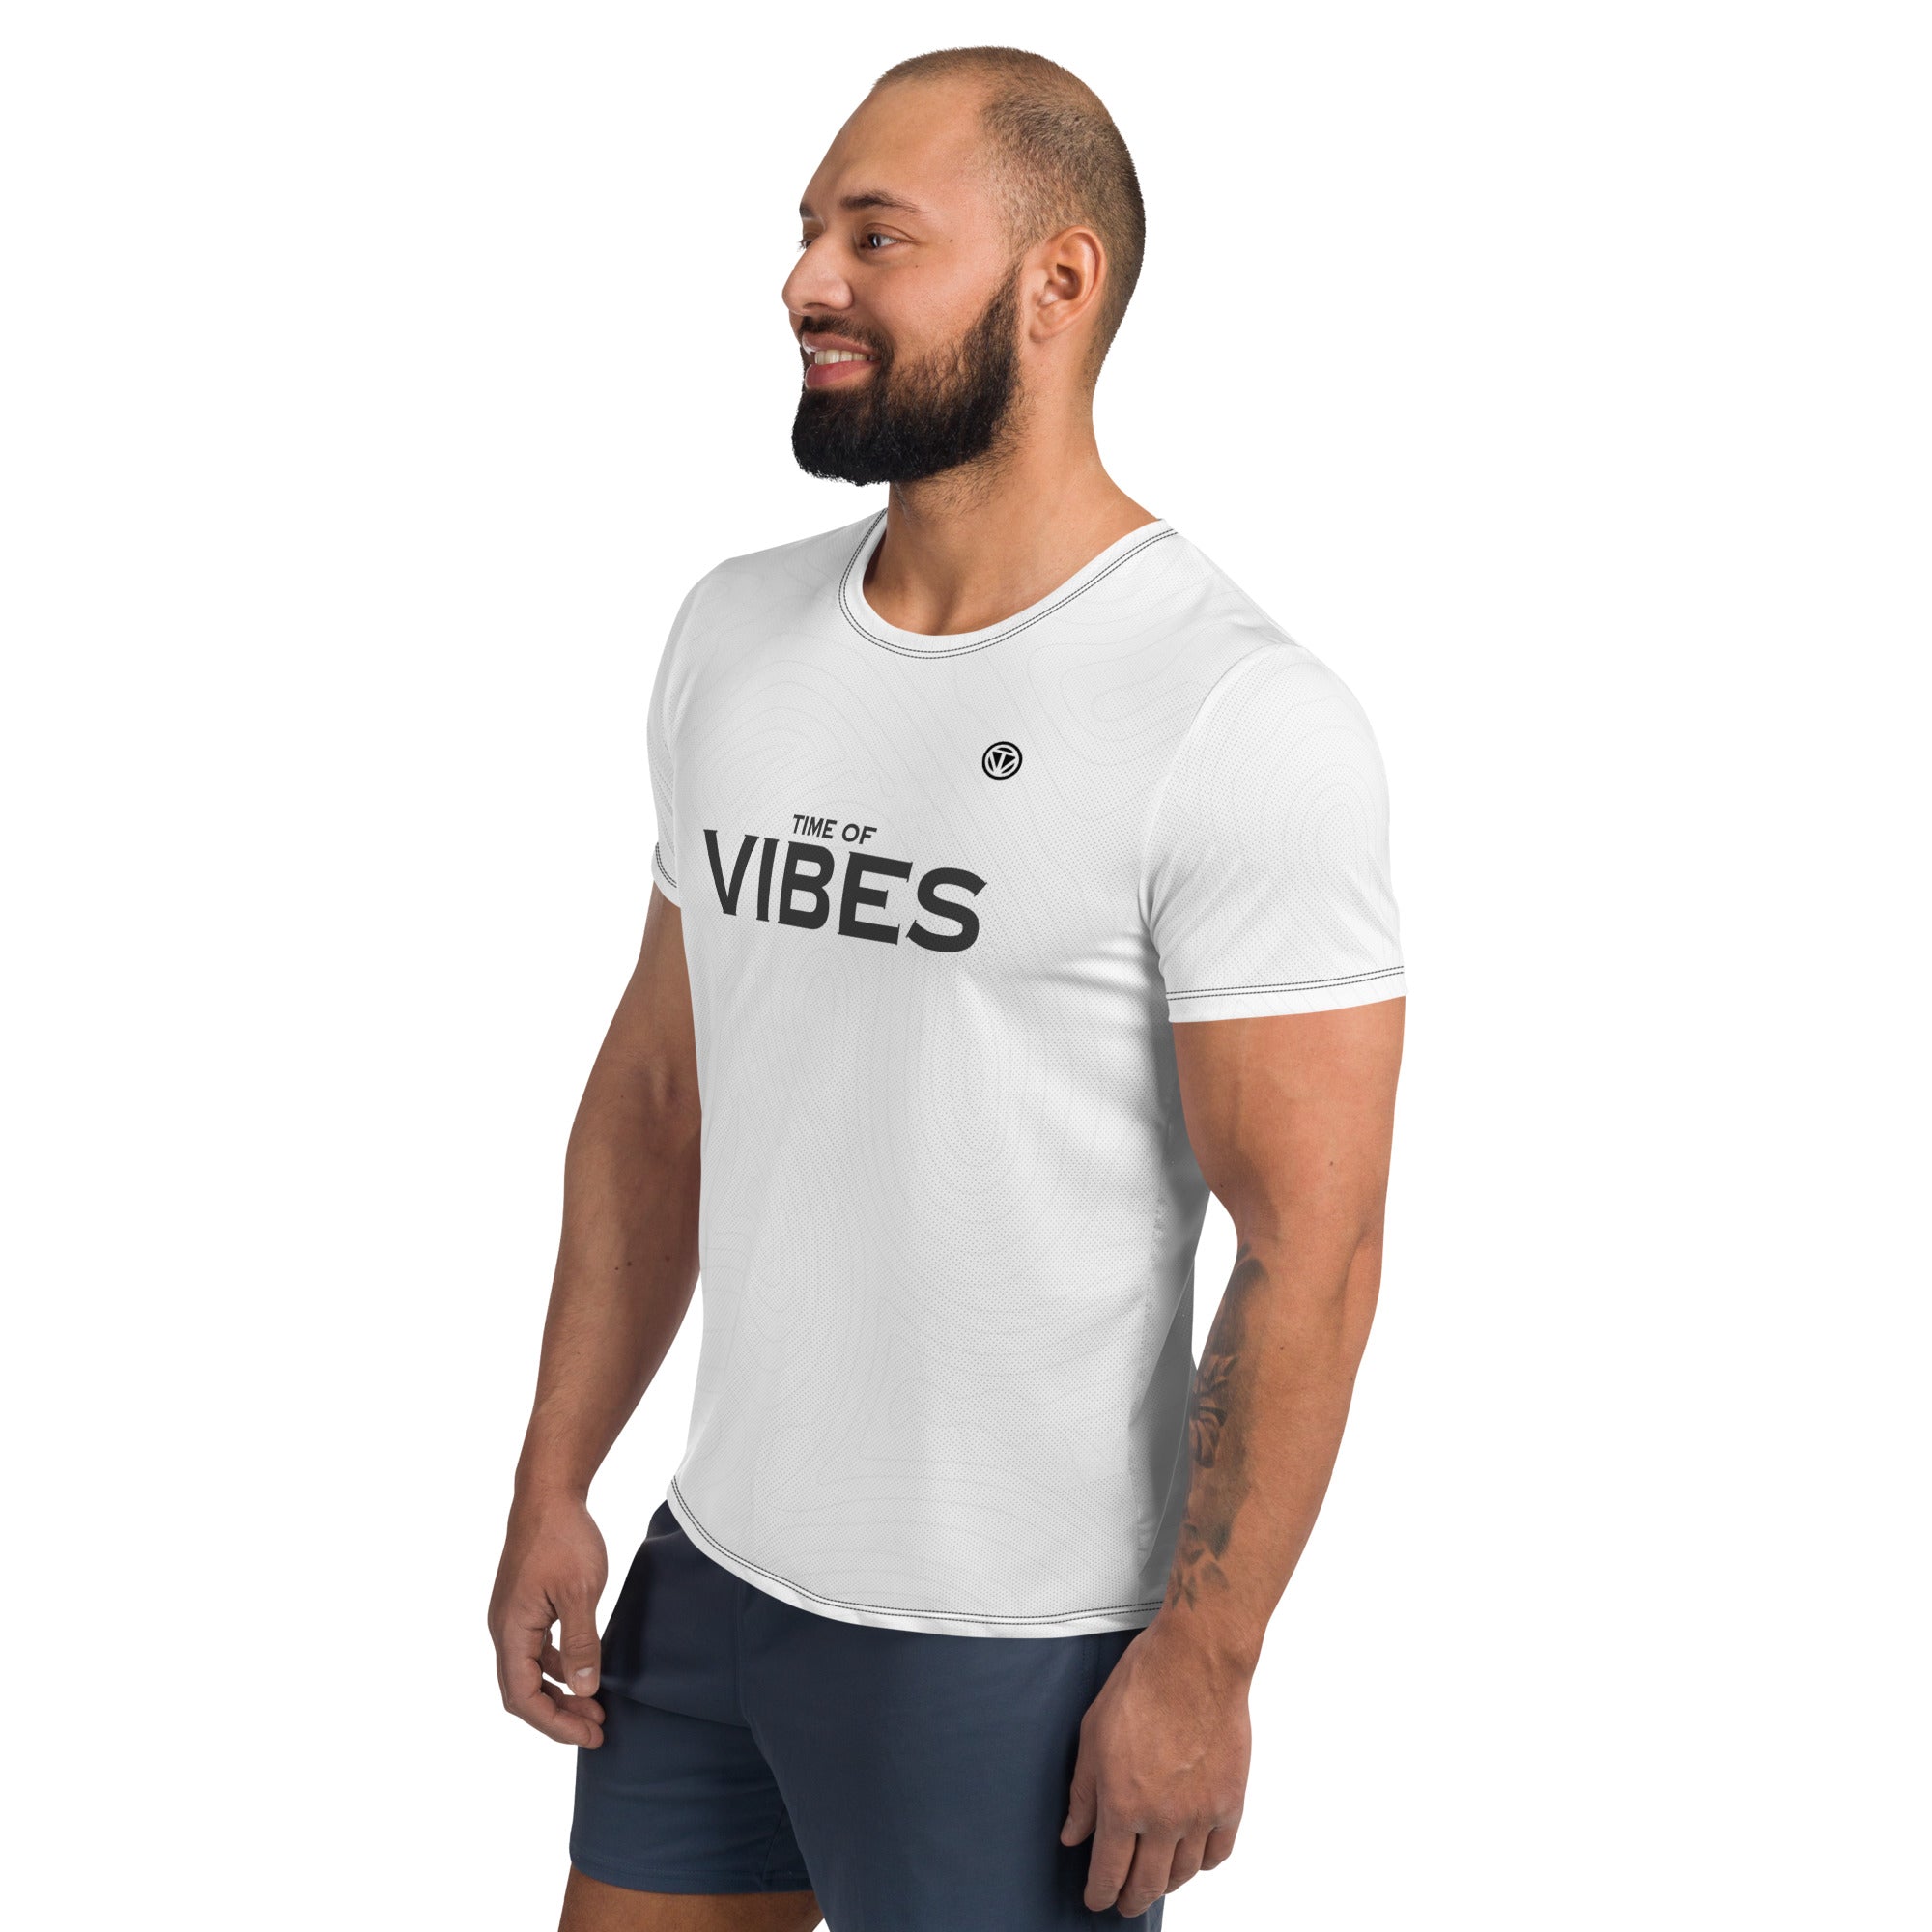 TIME OF VIBES TOV Herren Sport T-Shirt MOVE (Weiß) - €45,00